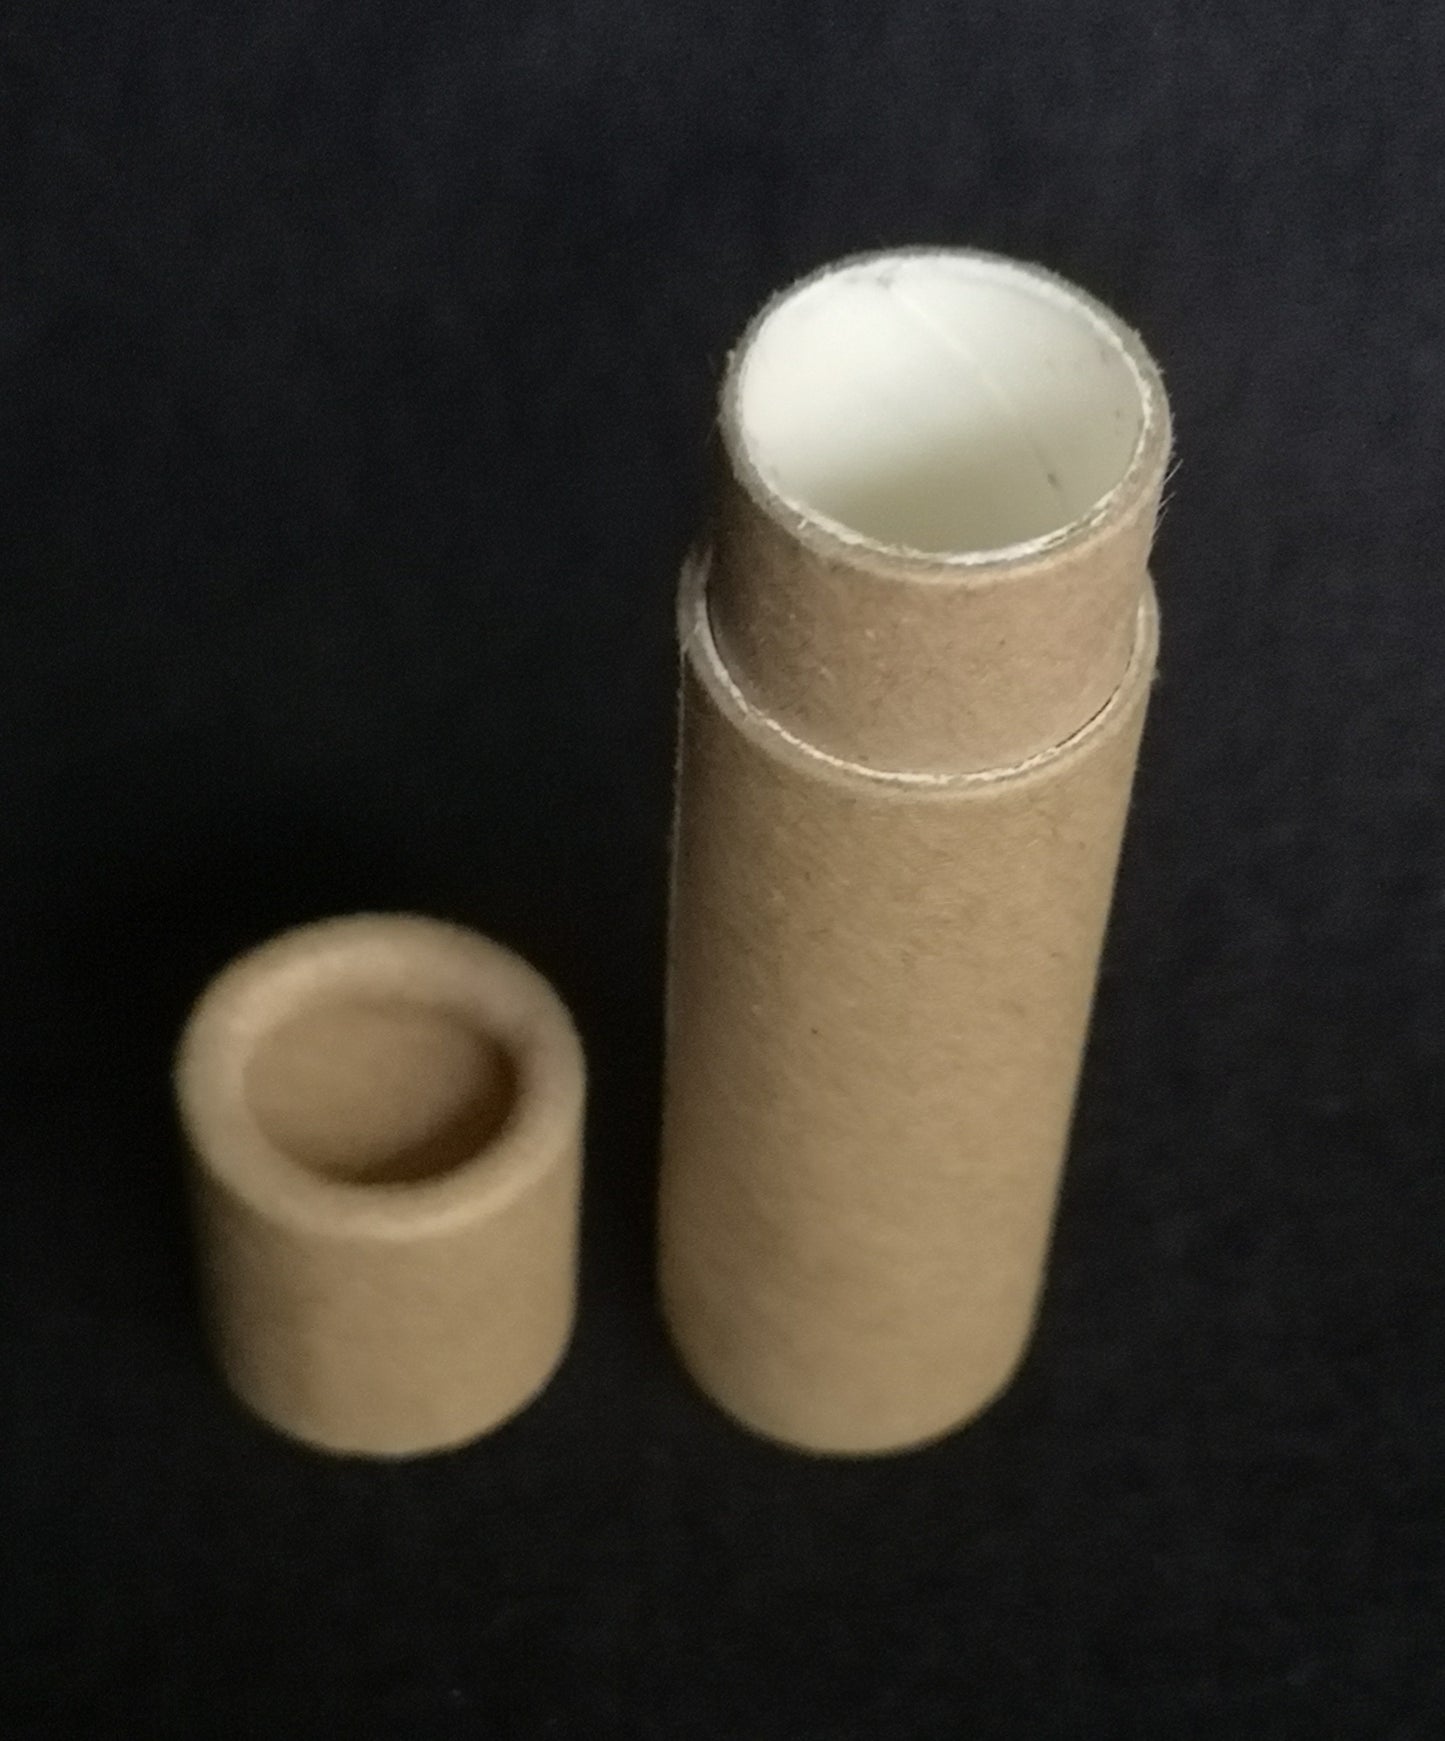 Lippenbalsamhülsen 17,8 ml - leer für DIY-Projekte